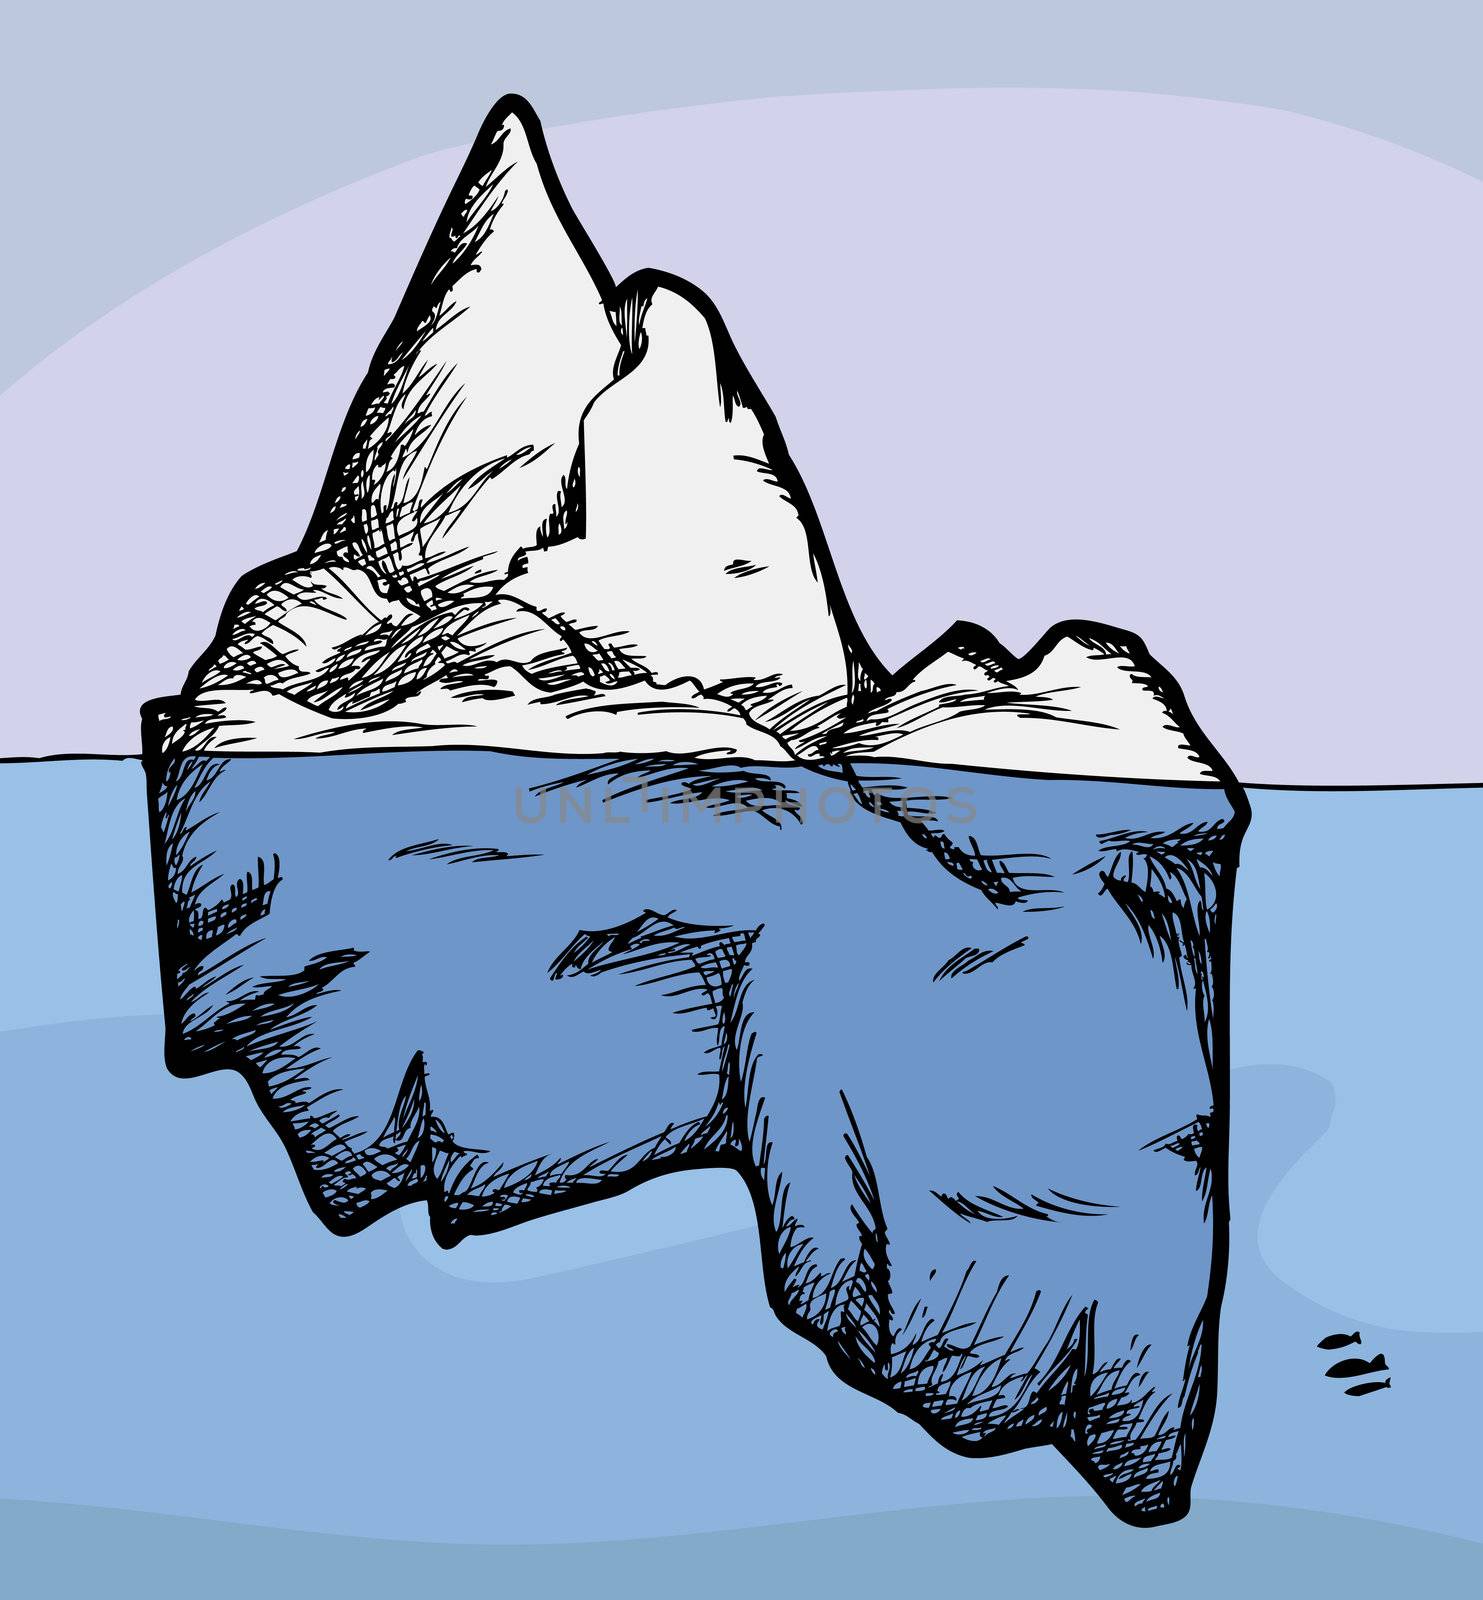 Iceberg by TheBlackRhino